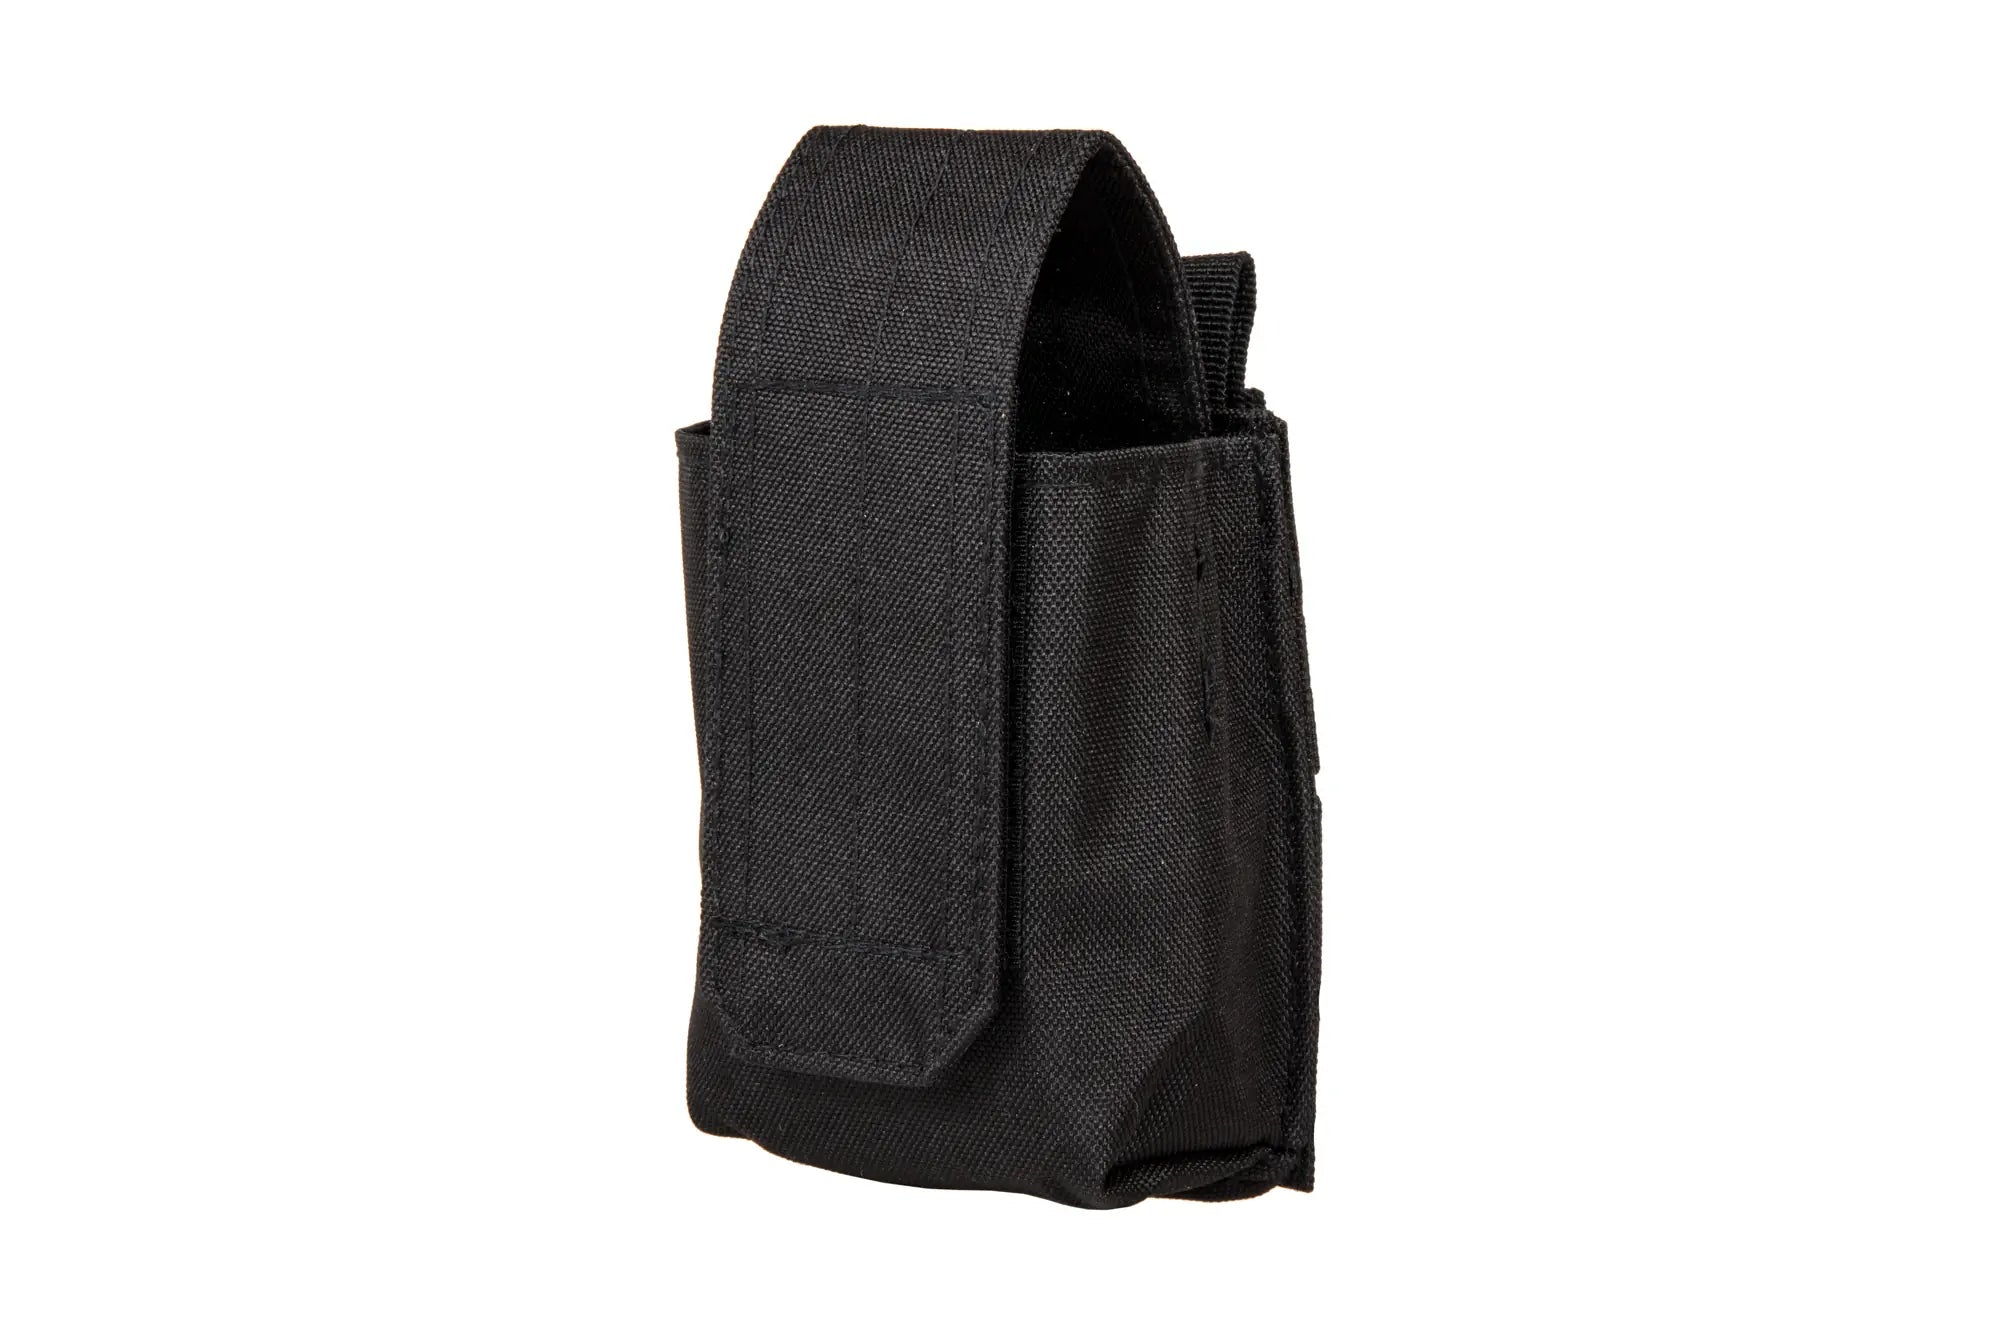 Grenade pouch - Black